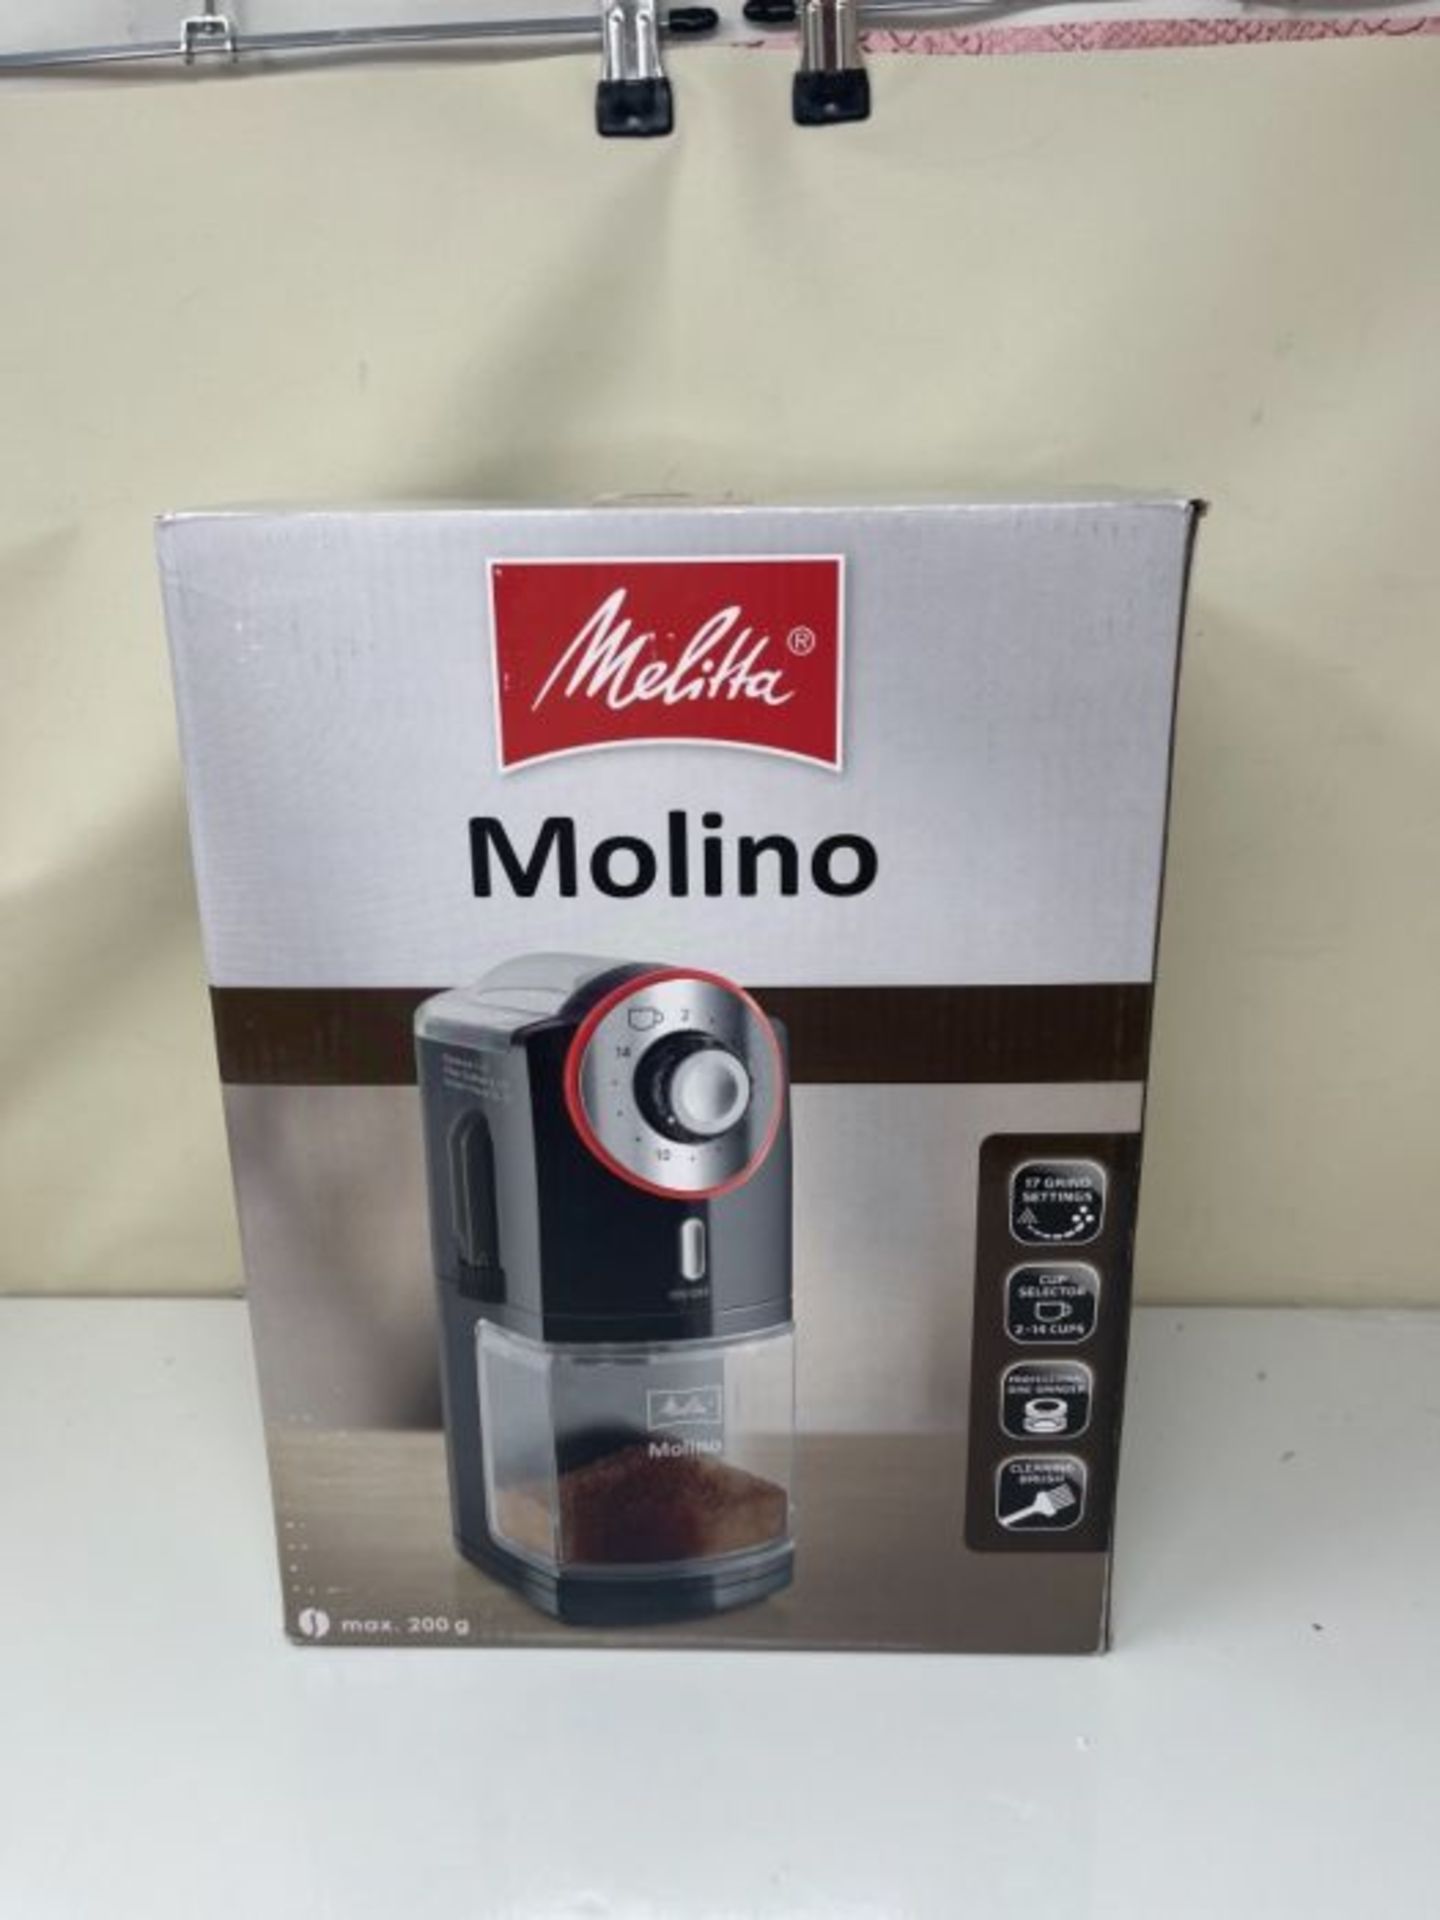 Melitta Molino Coffee Grinder, 1019-01, Electric Coffee Grinder, Flat Grinding Disc, B - Image 2 of 3